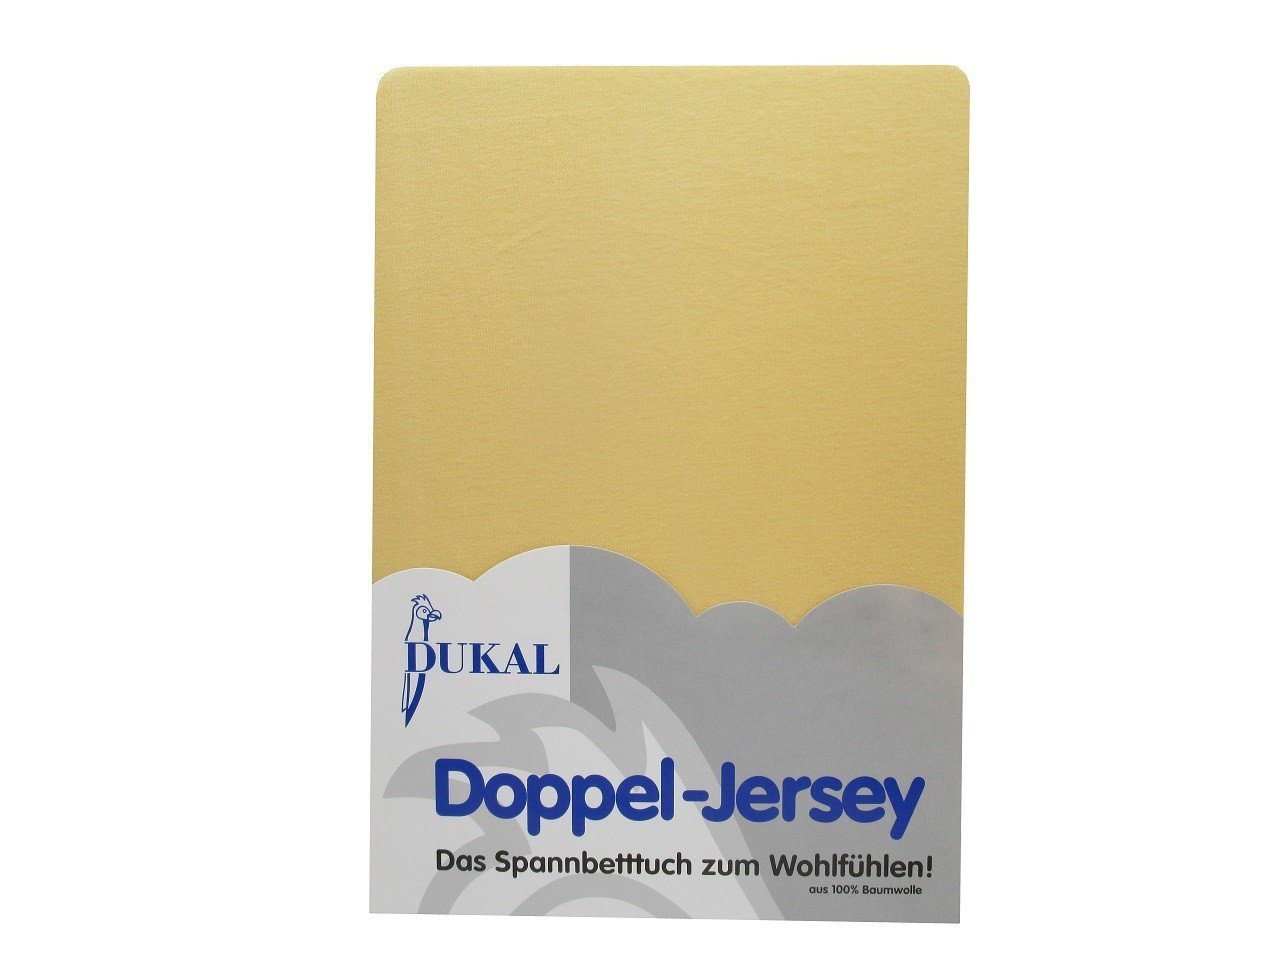 Spannbettlaken kochecht, alle Farben waschbar bei 95°C, 100% Baumwolle, DUKAL, Doppel-Jersey, Gummizug: rundum, (1 Stück), 80x200 cm, aus hochwertigem Doppel-Jersey, Made in Germany von DUKAL